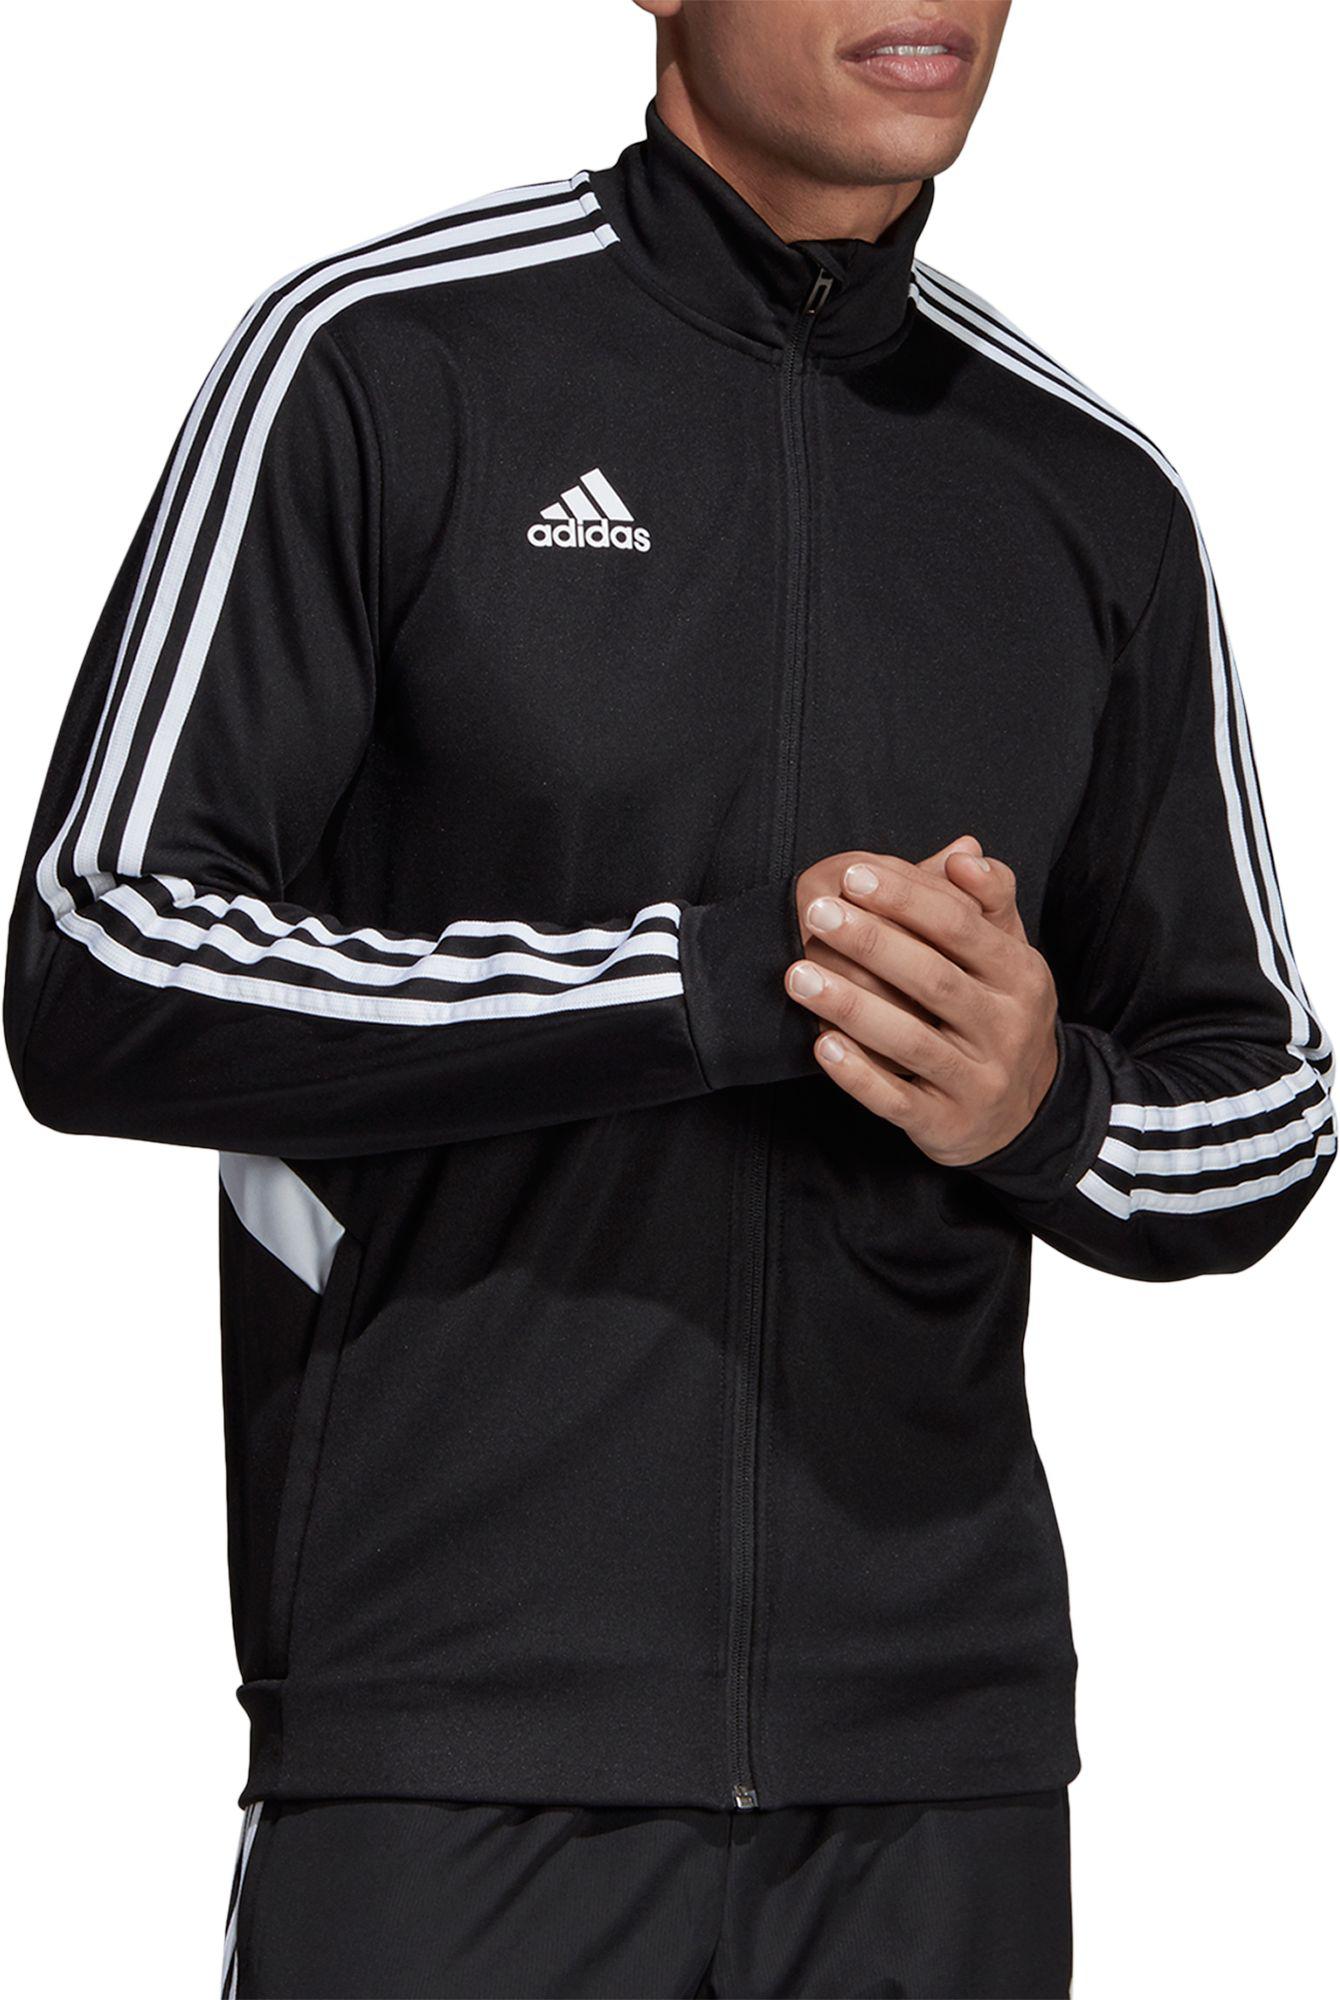 adidas Synthetic Tiro 19 Soccer Training Jacket in Black for Men - Lyst